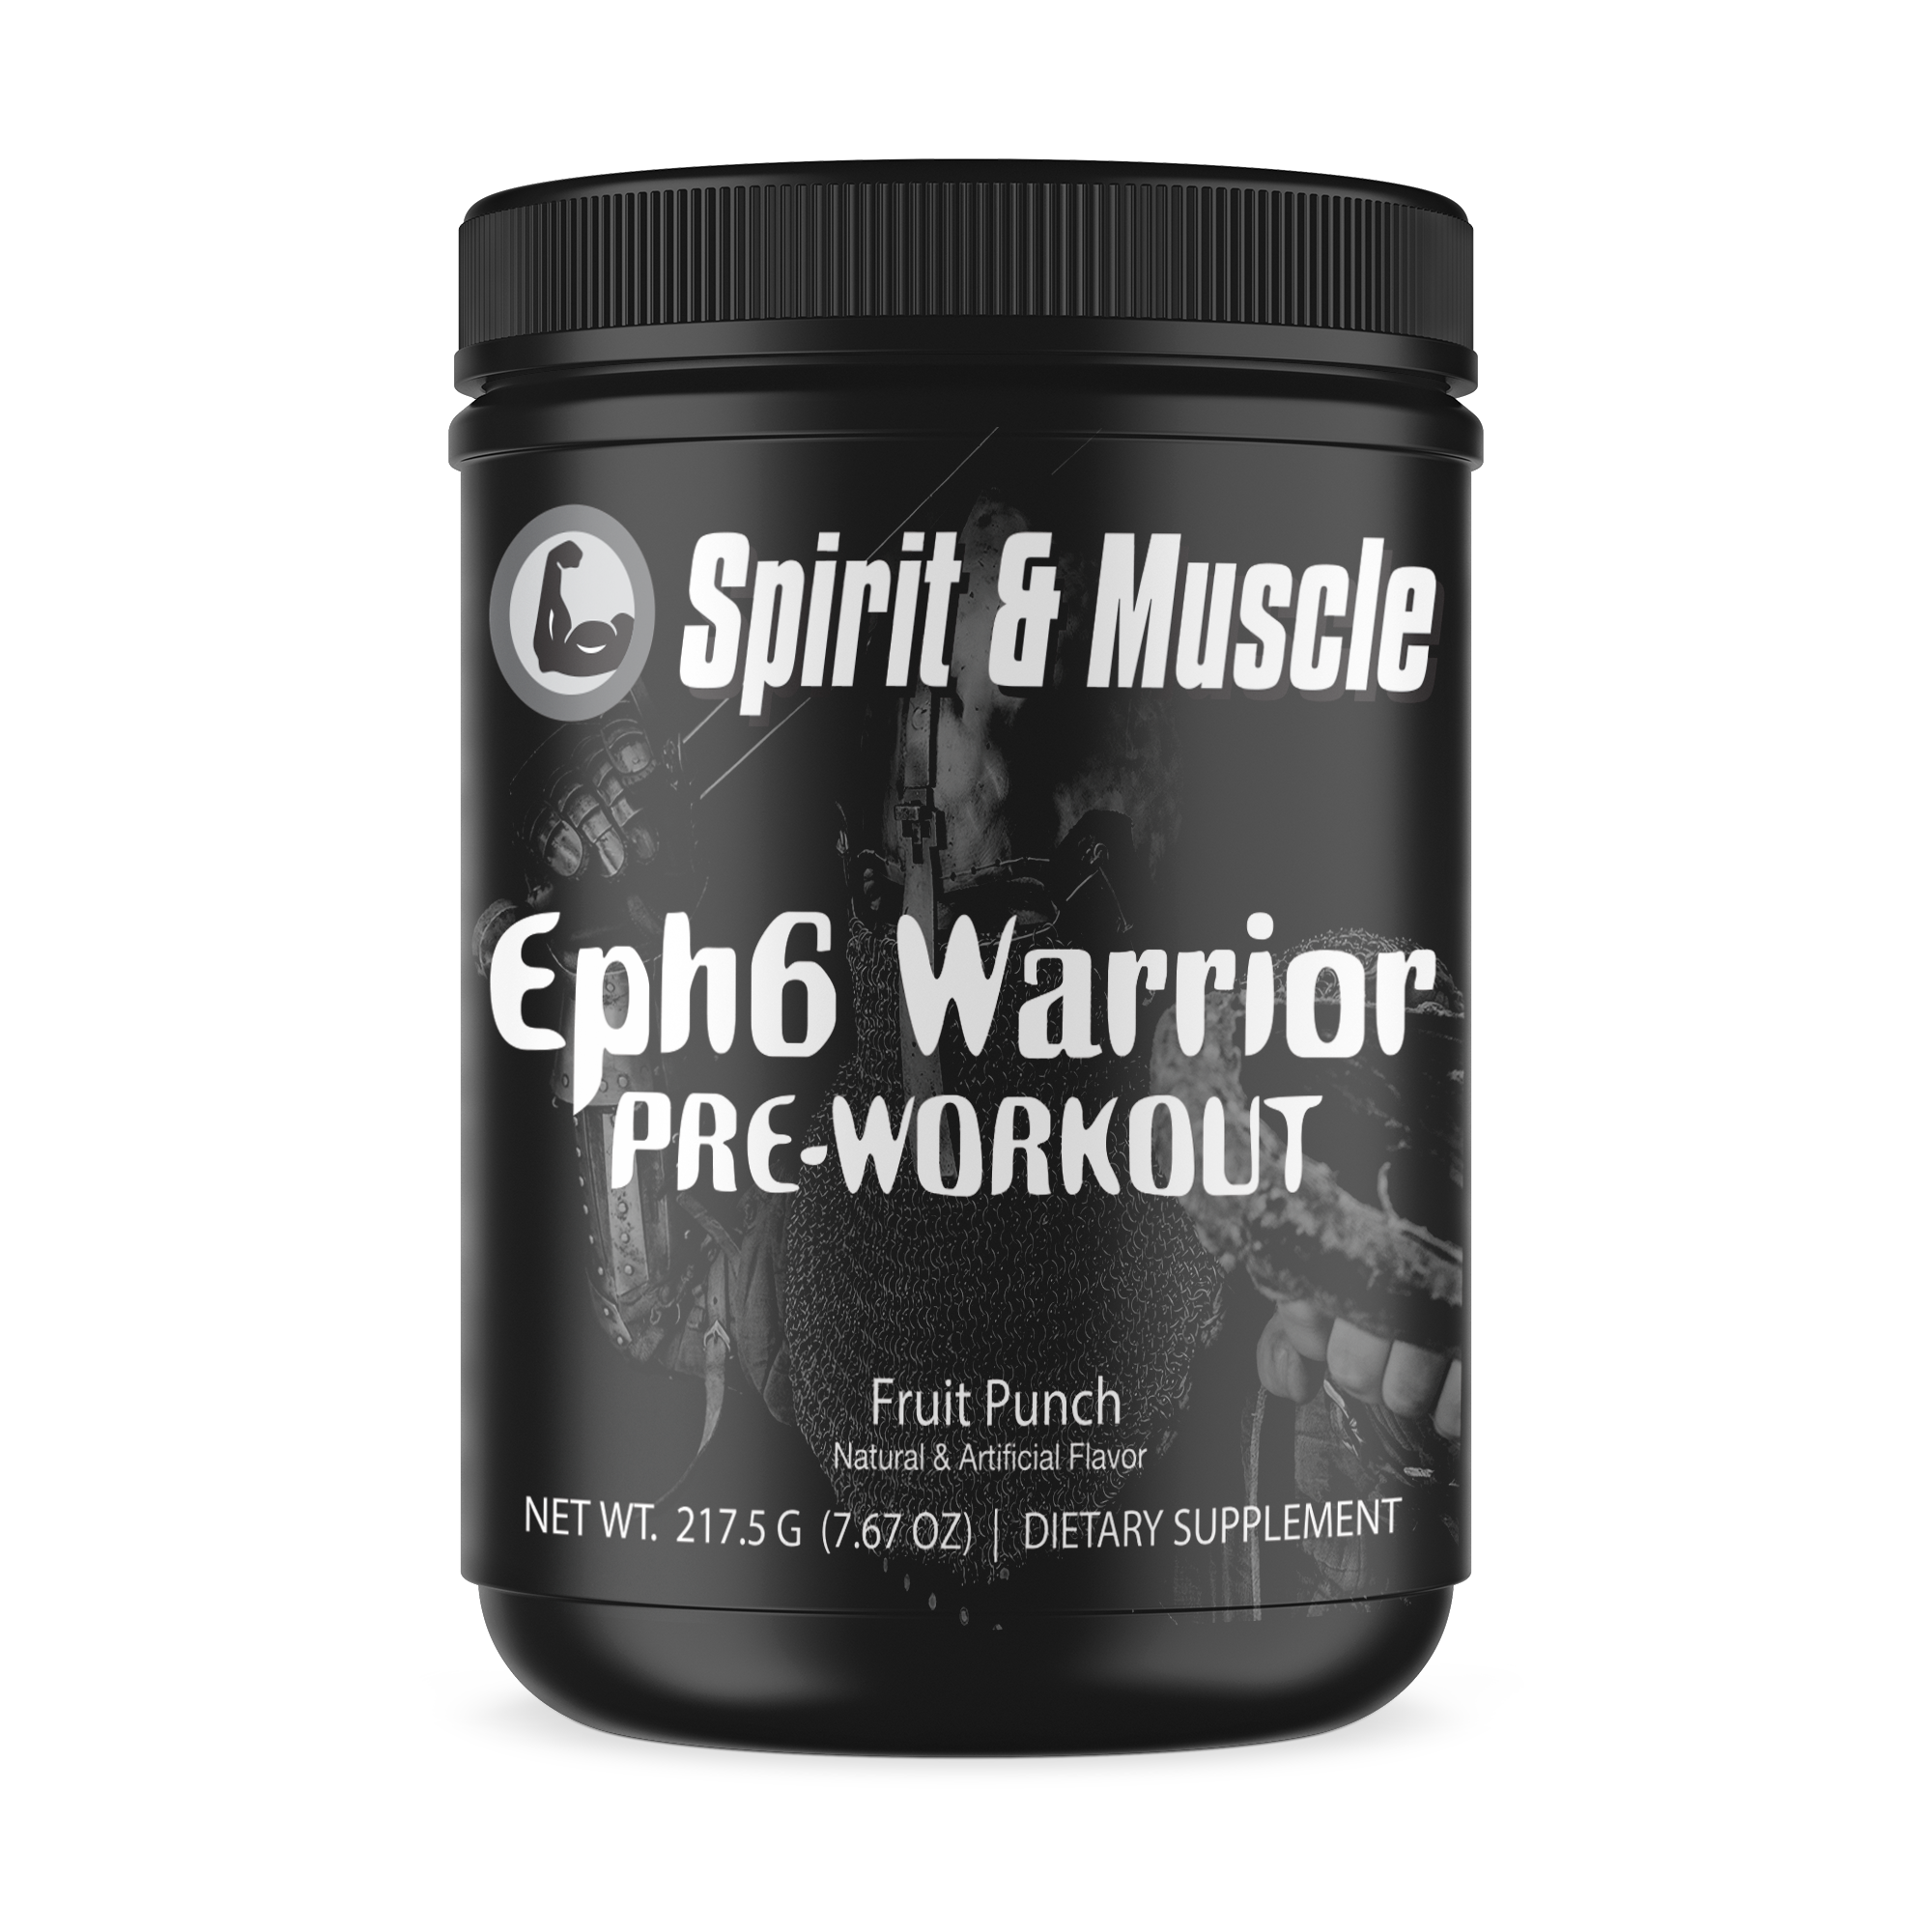 Eph. 6 Warrior Pre-Workout - Fruit Punch